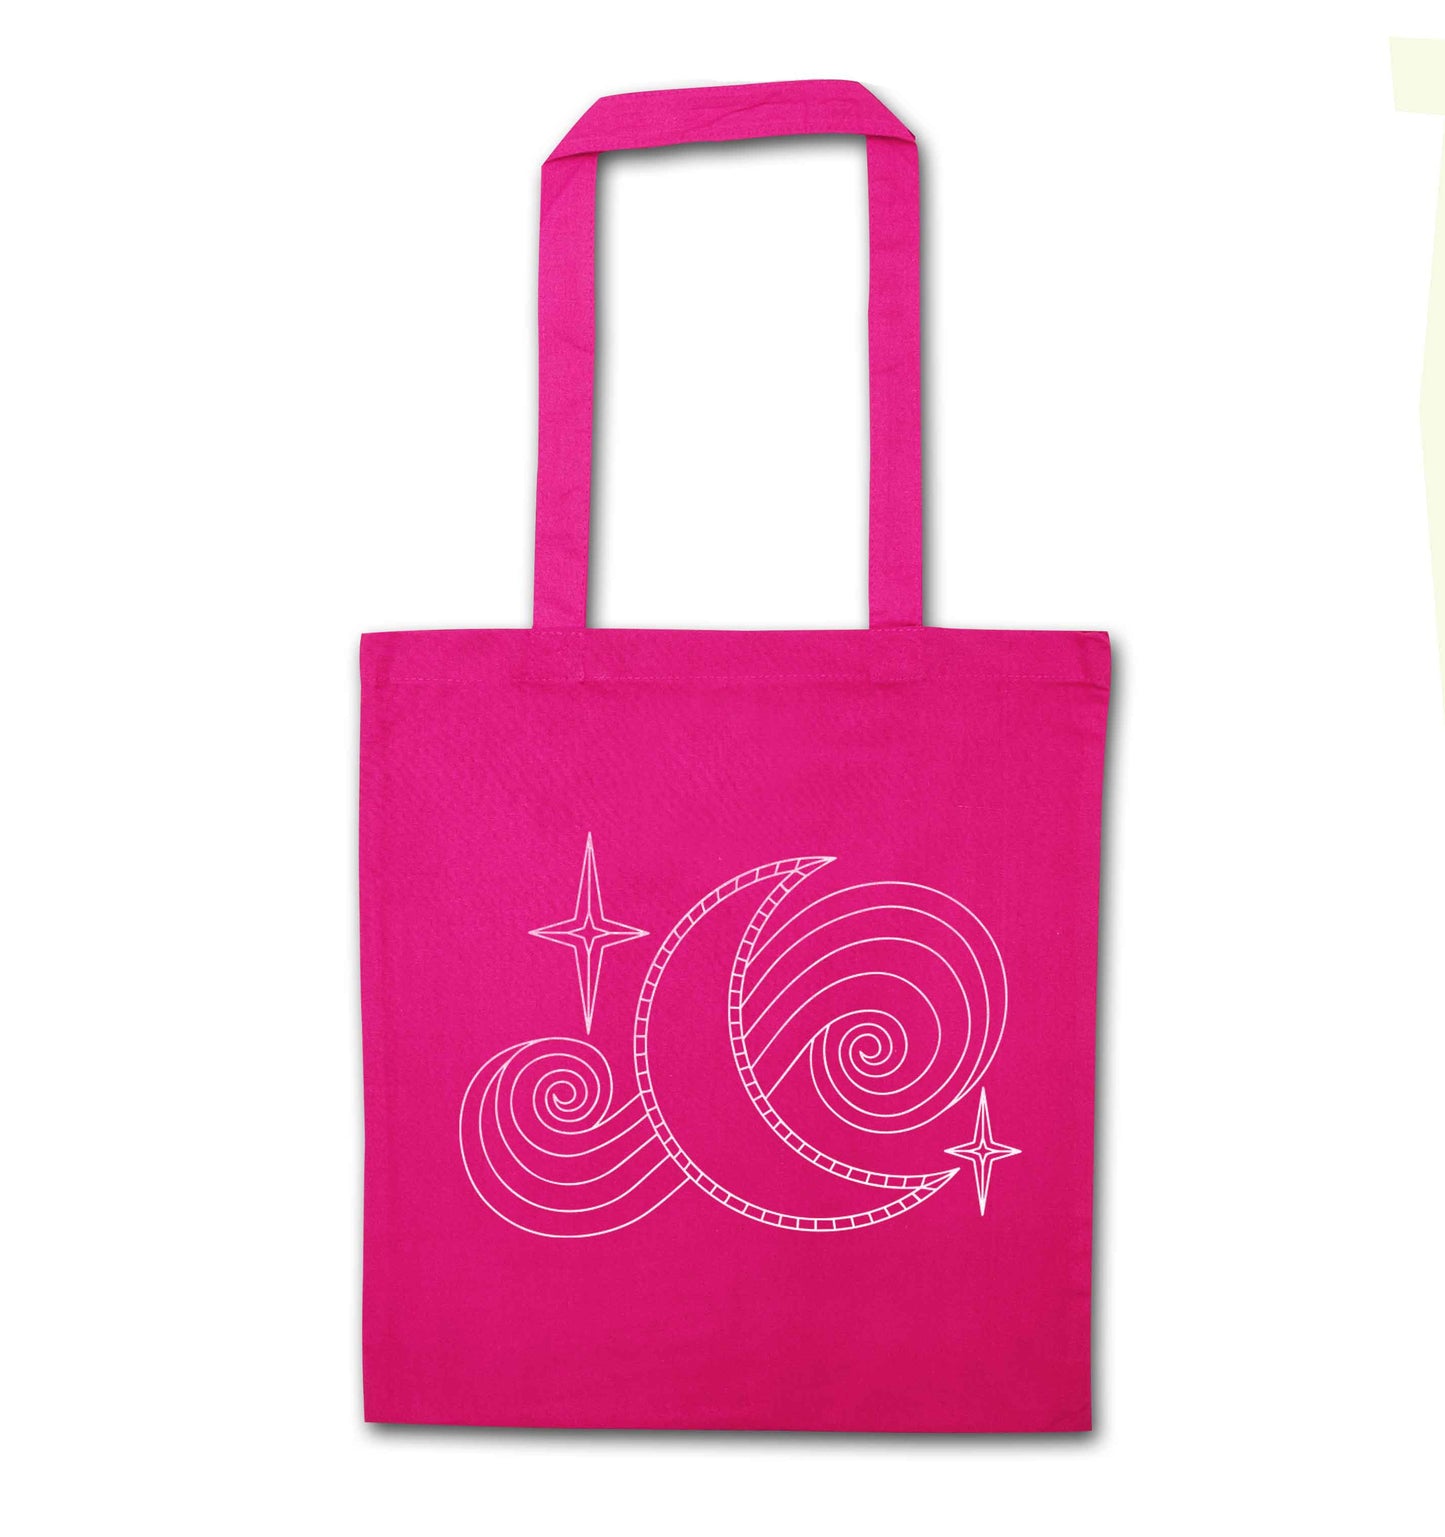 Moon and stars illustration pink tote bag